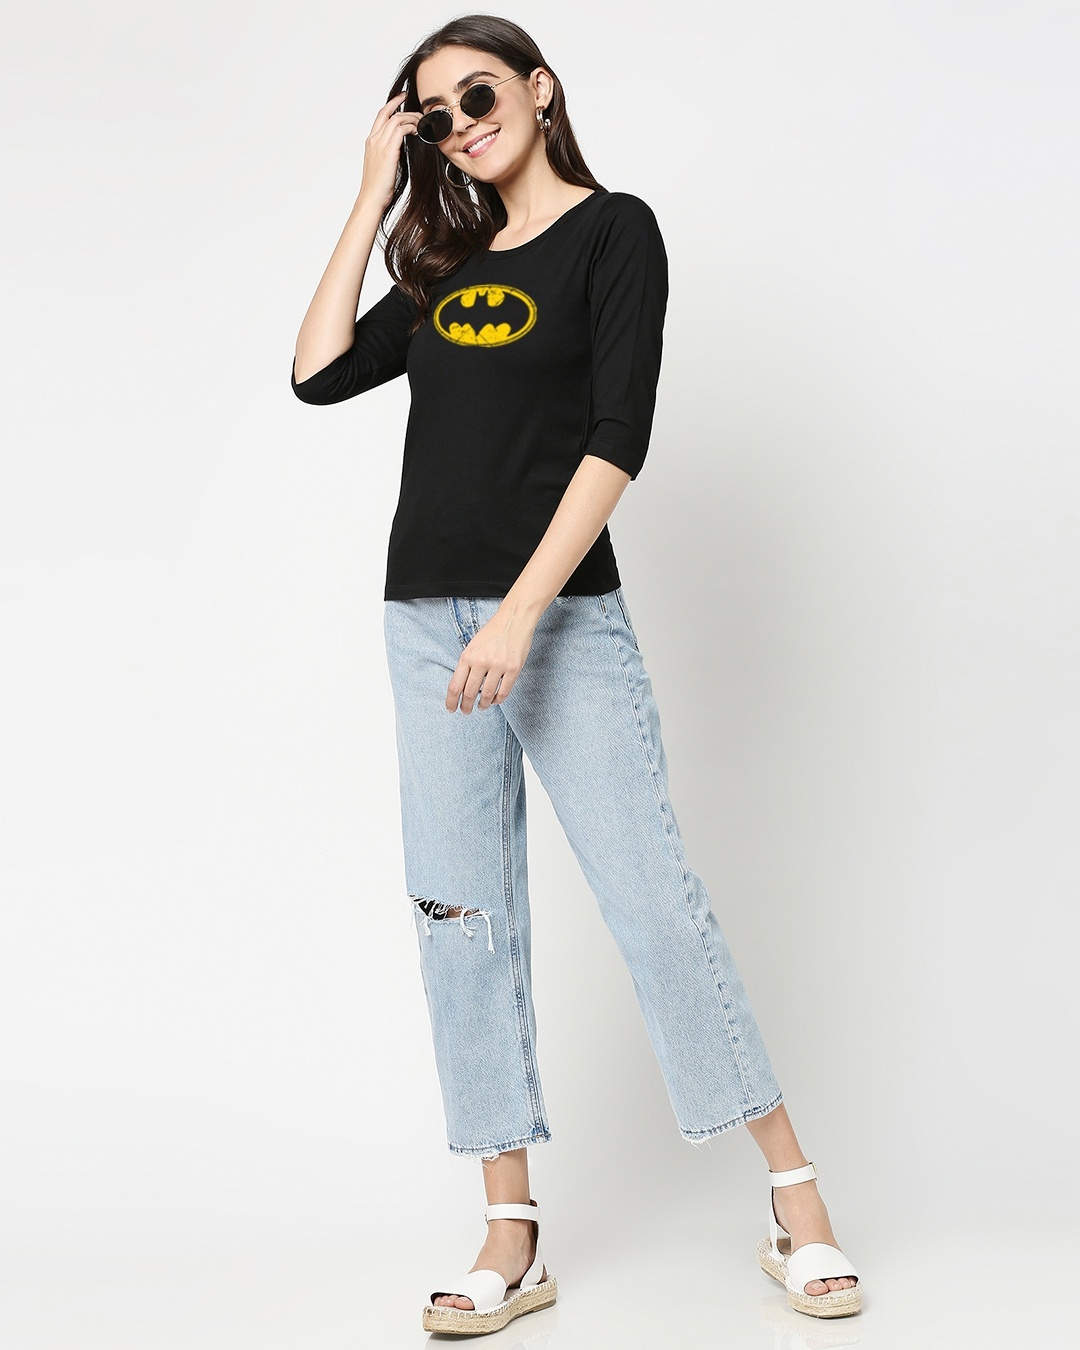 Shop Women's Batman classic logo (BML) Round Neck 3/4 Sleeve T-shirt-Design